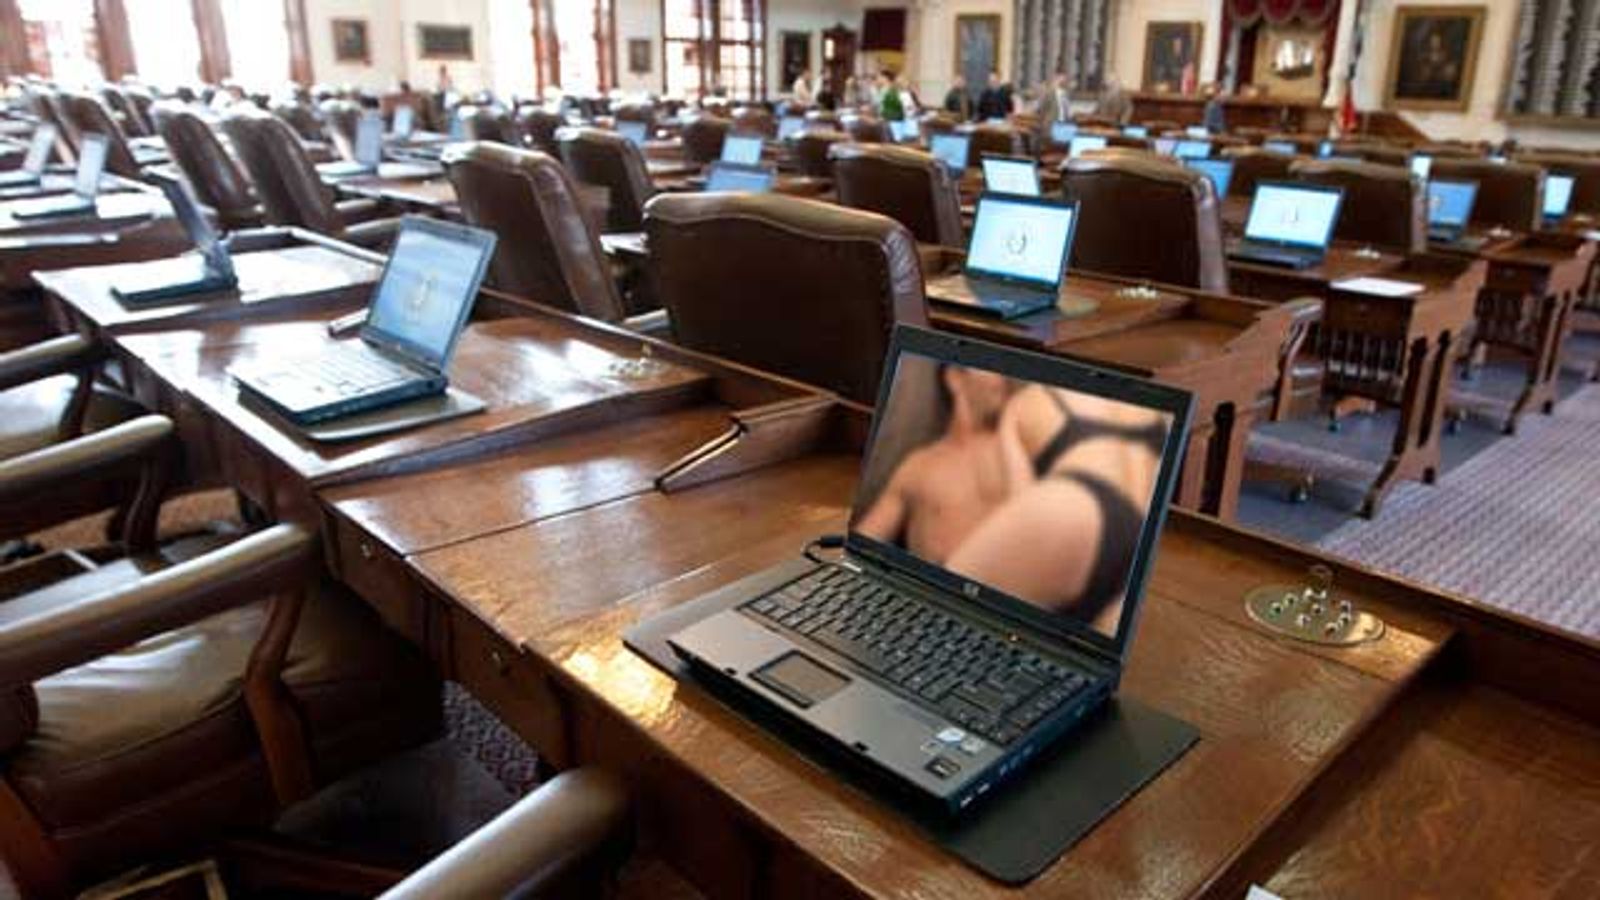 Porn Alleged to be a Fixture of Sexist Texas Legislature